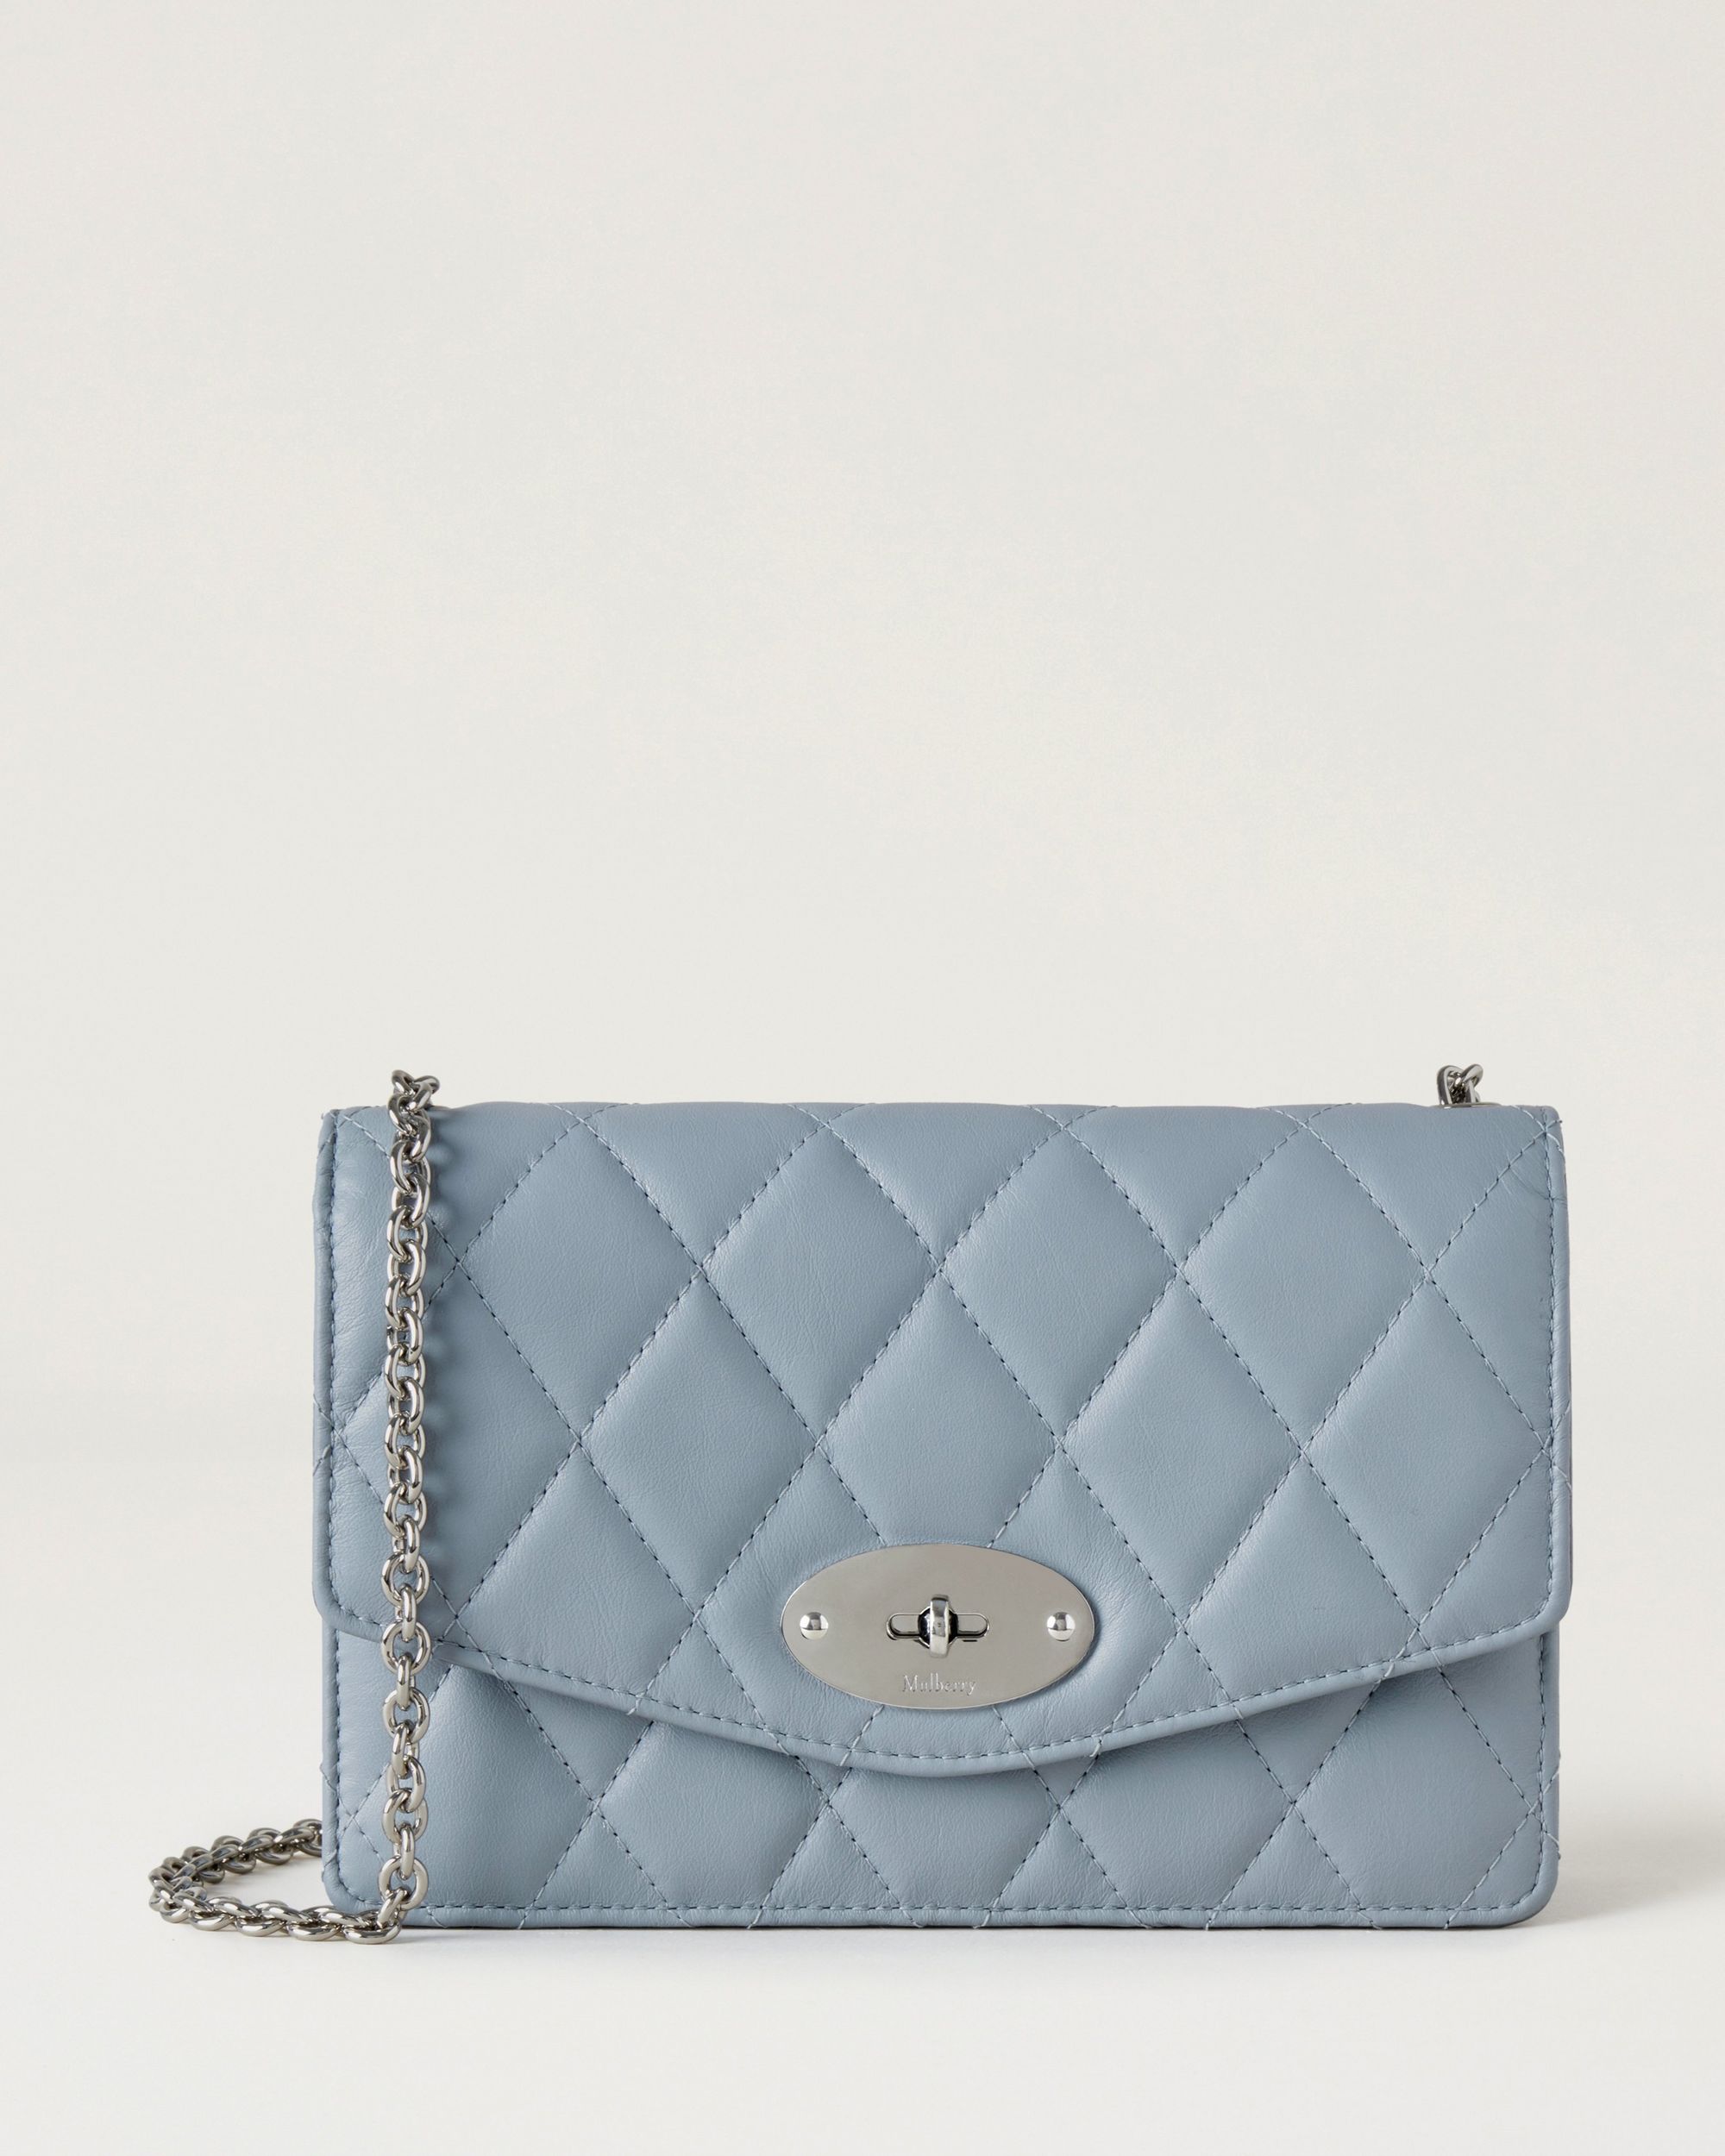 Pretty blue little luxury handbag